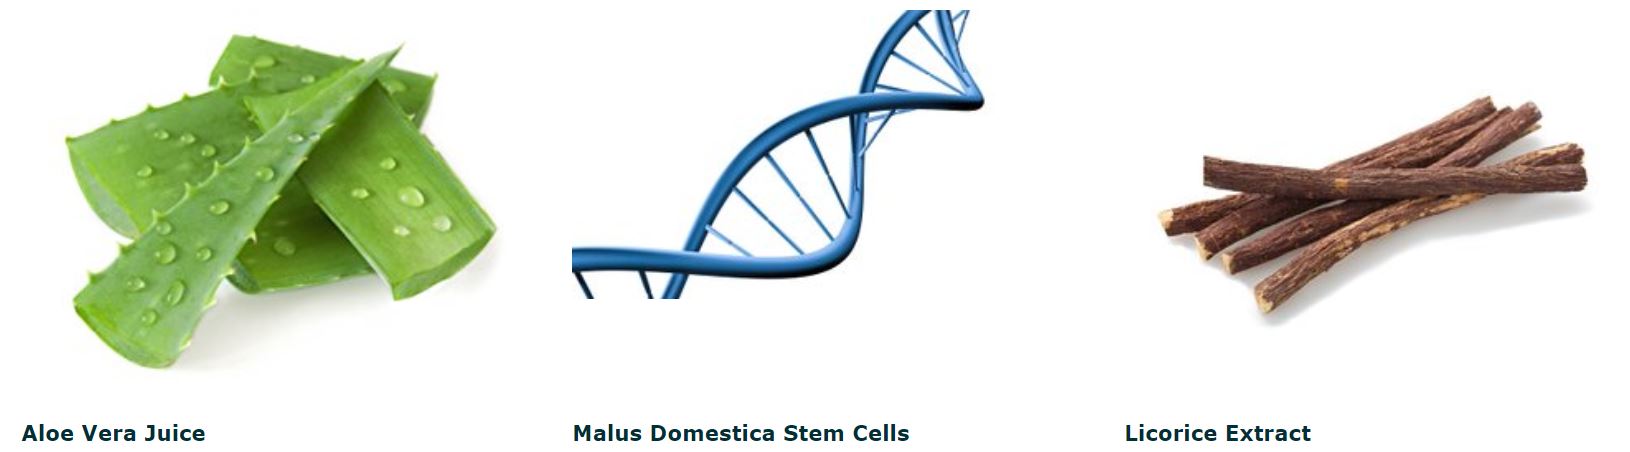 aloe vera stem cells licorice extract images